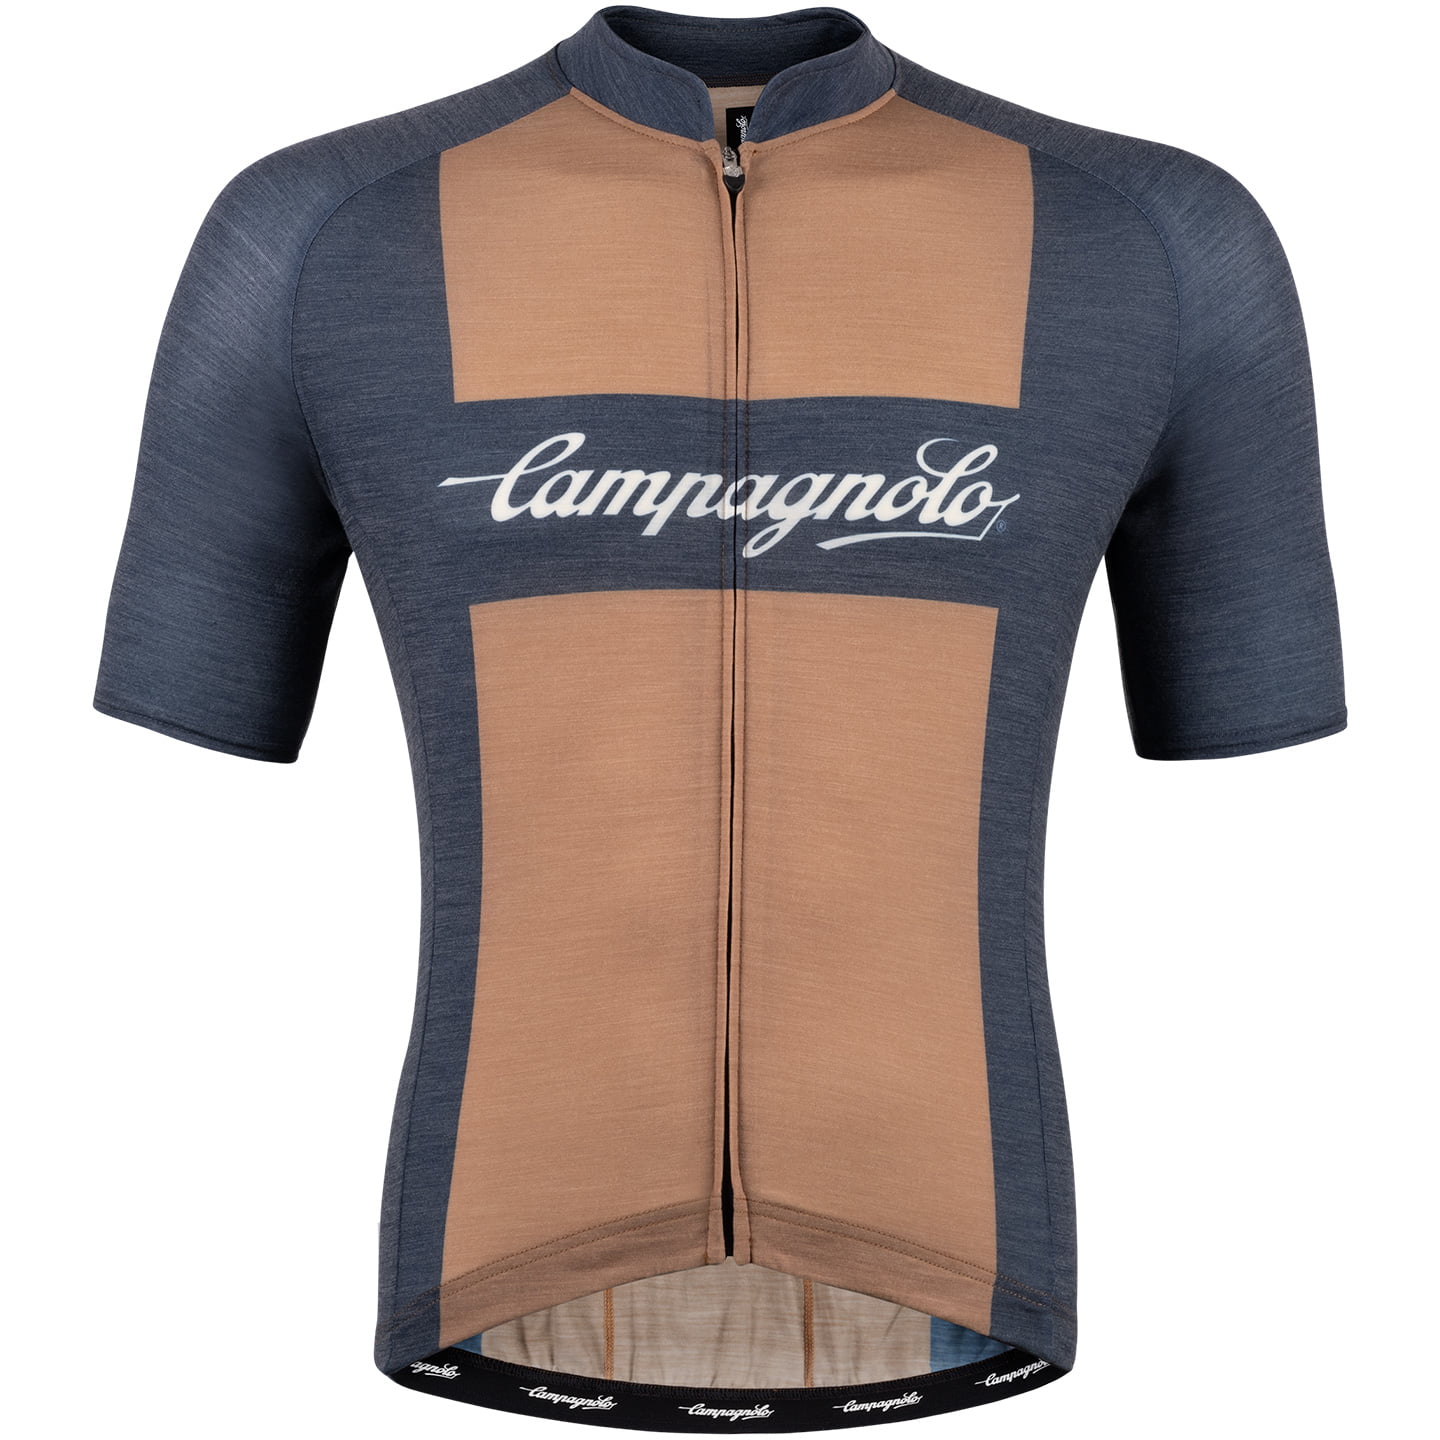 CAMPAGNOLO Palladio Short Sleeve Jersey Short Sleeve Jersey, for men, size L, Cycling jersey, Cycling clothing